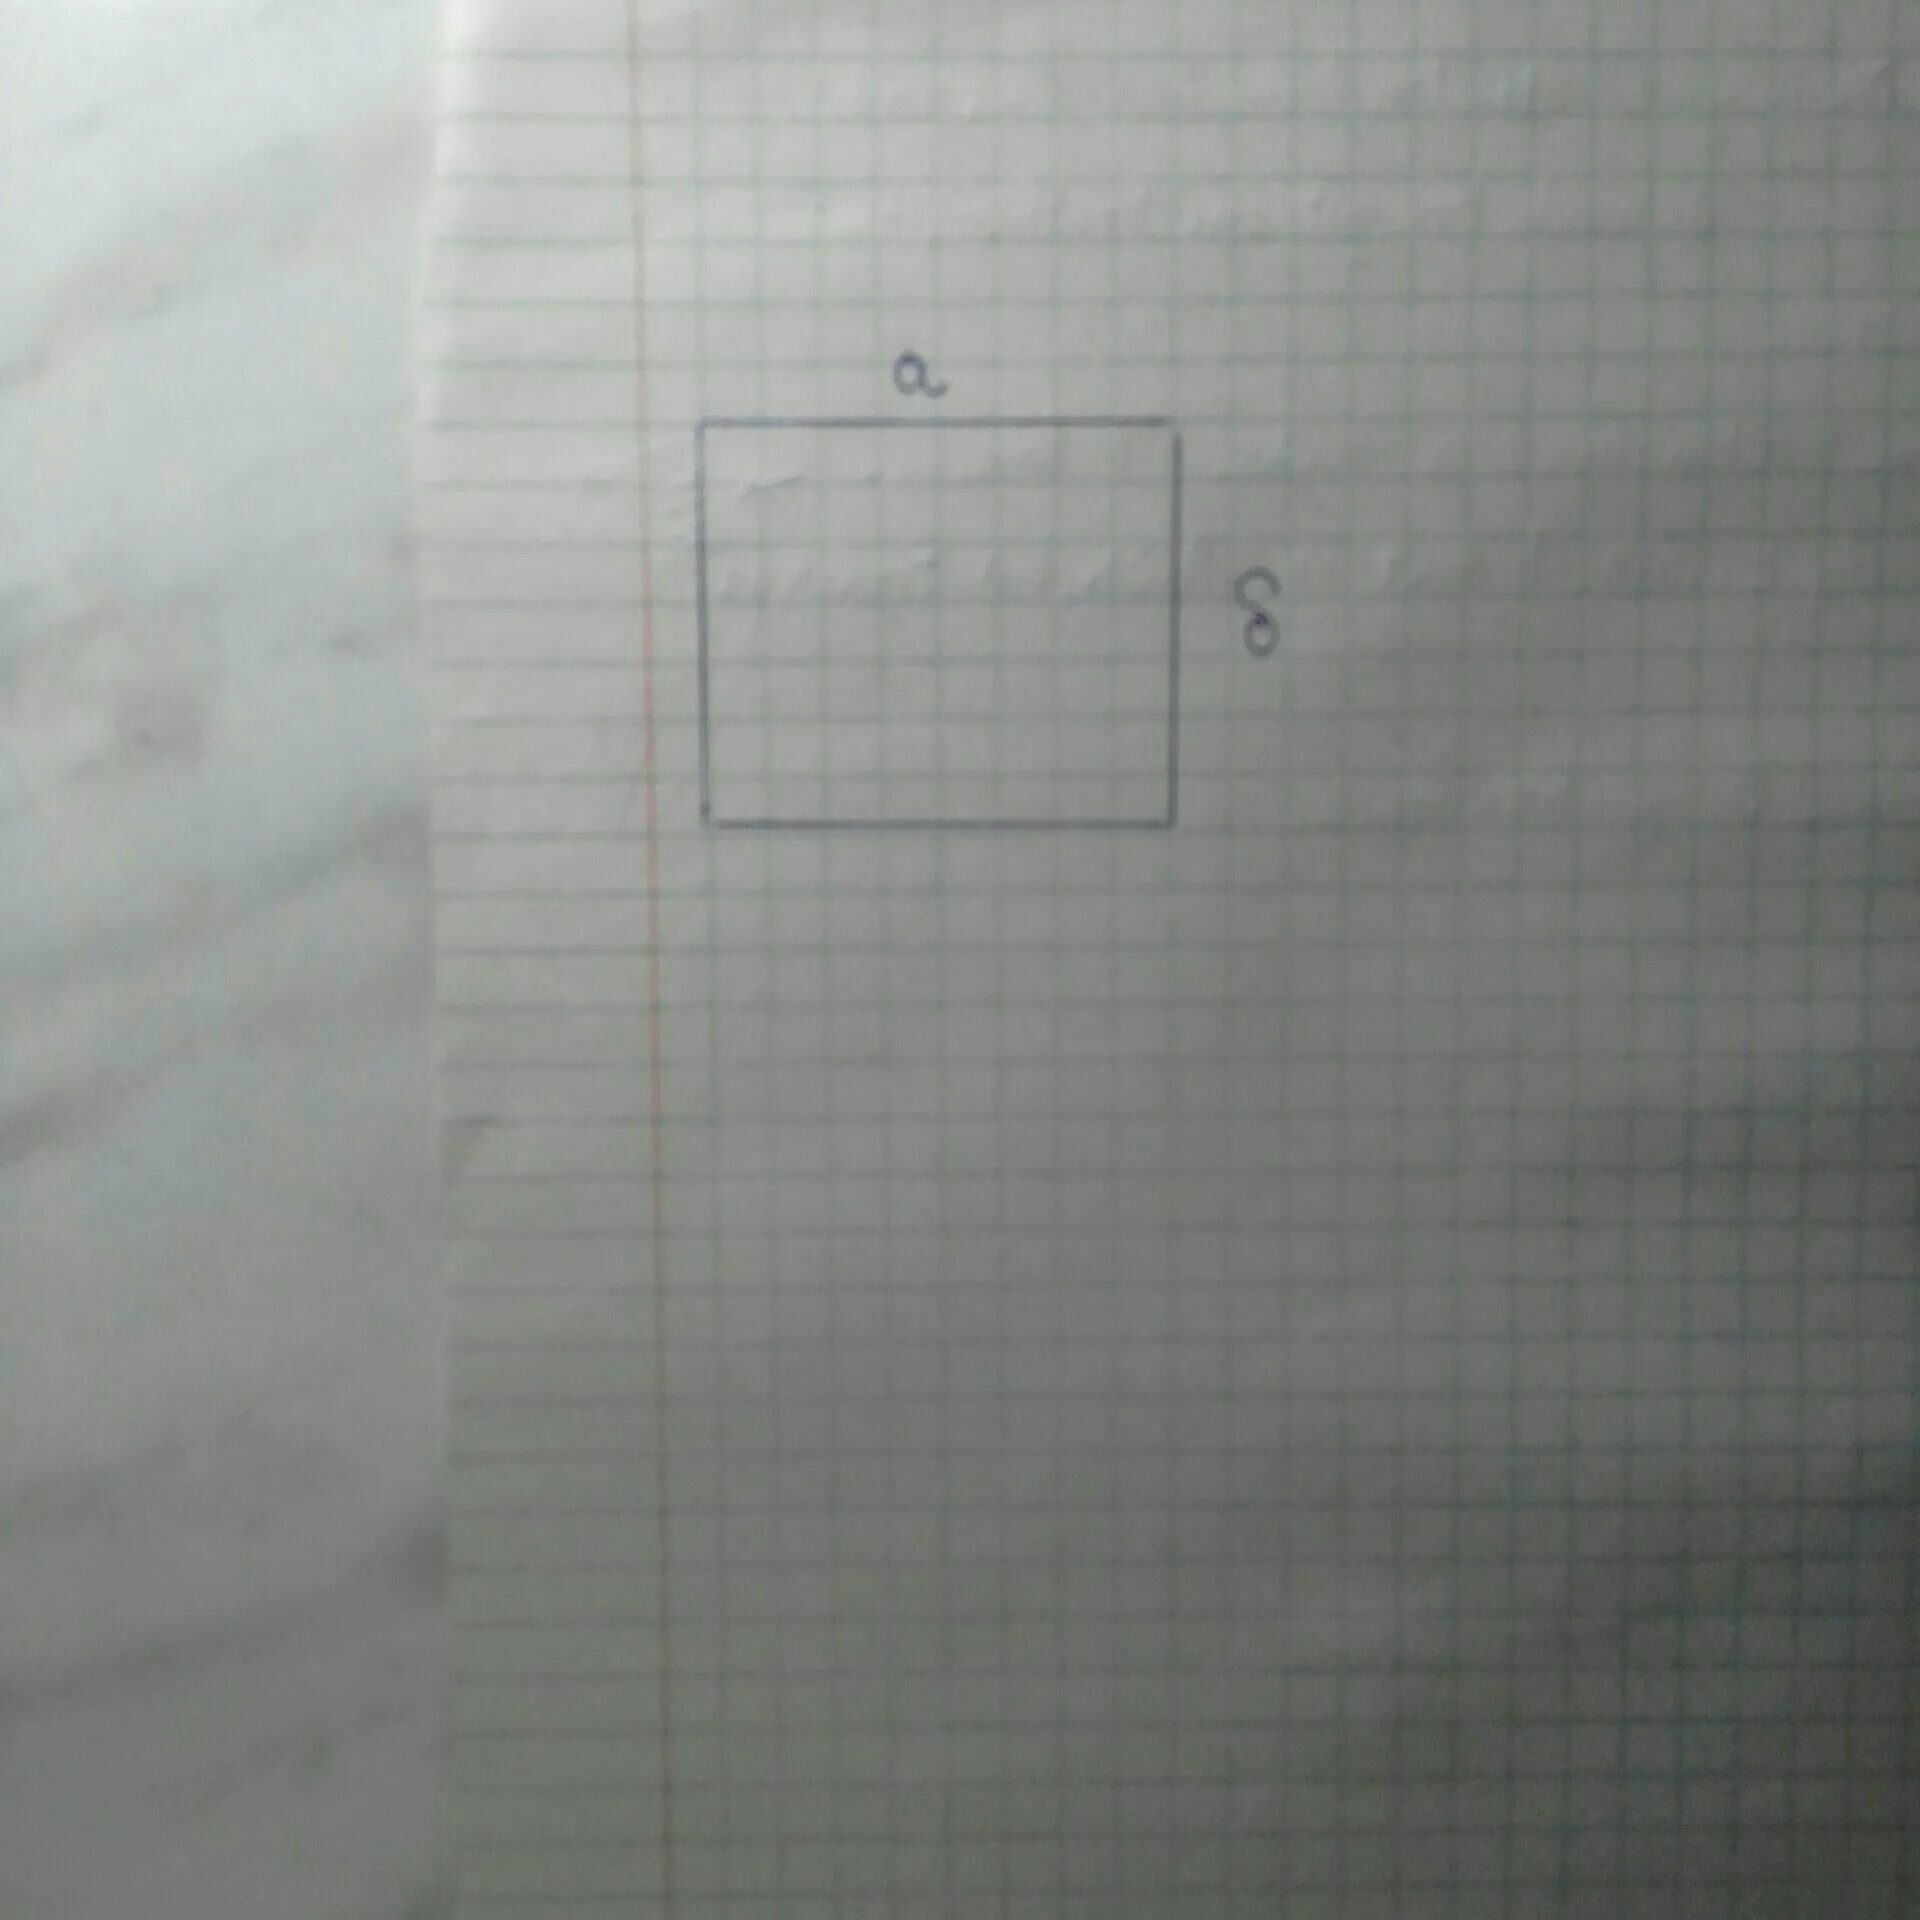 Квадрат со стороной 25 миллиметров. Квадрат со стороной 34 мм. Постройки квадрат со стороной 34 мм. Квадрат со стороной а. Постройте в тетради квадрат со стороной 4 сантиметра 4 сантиметра.